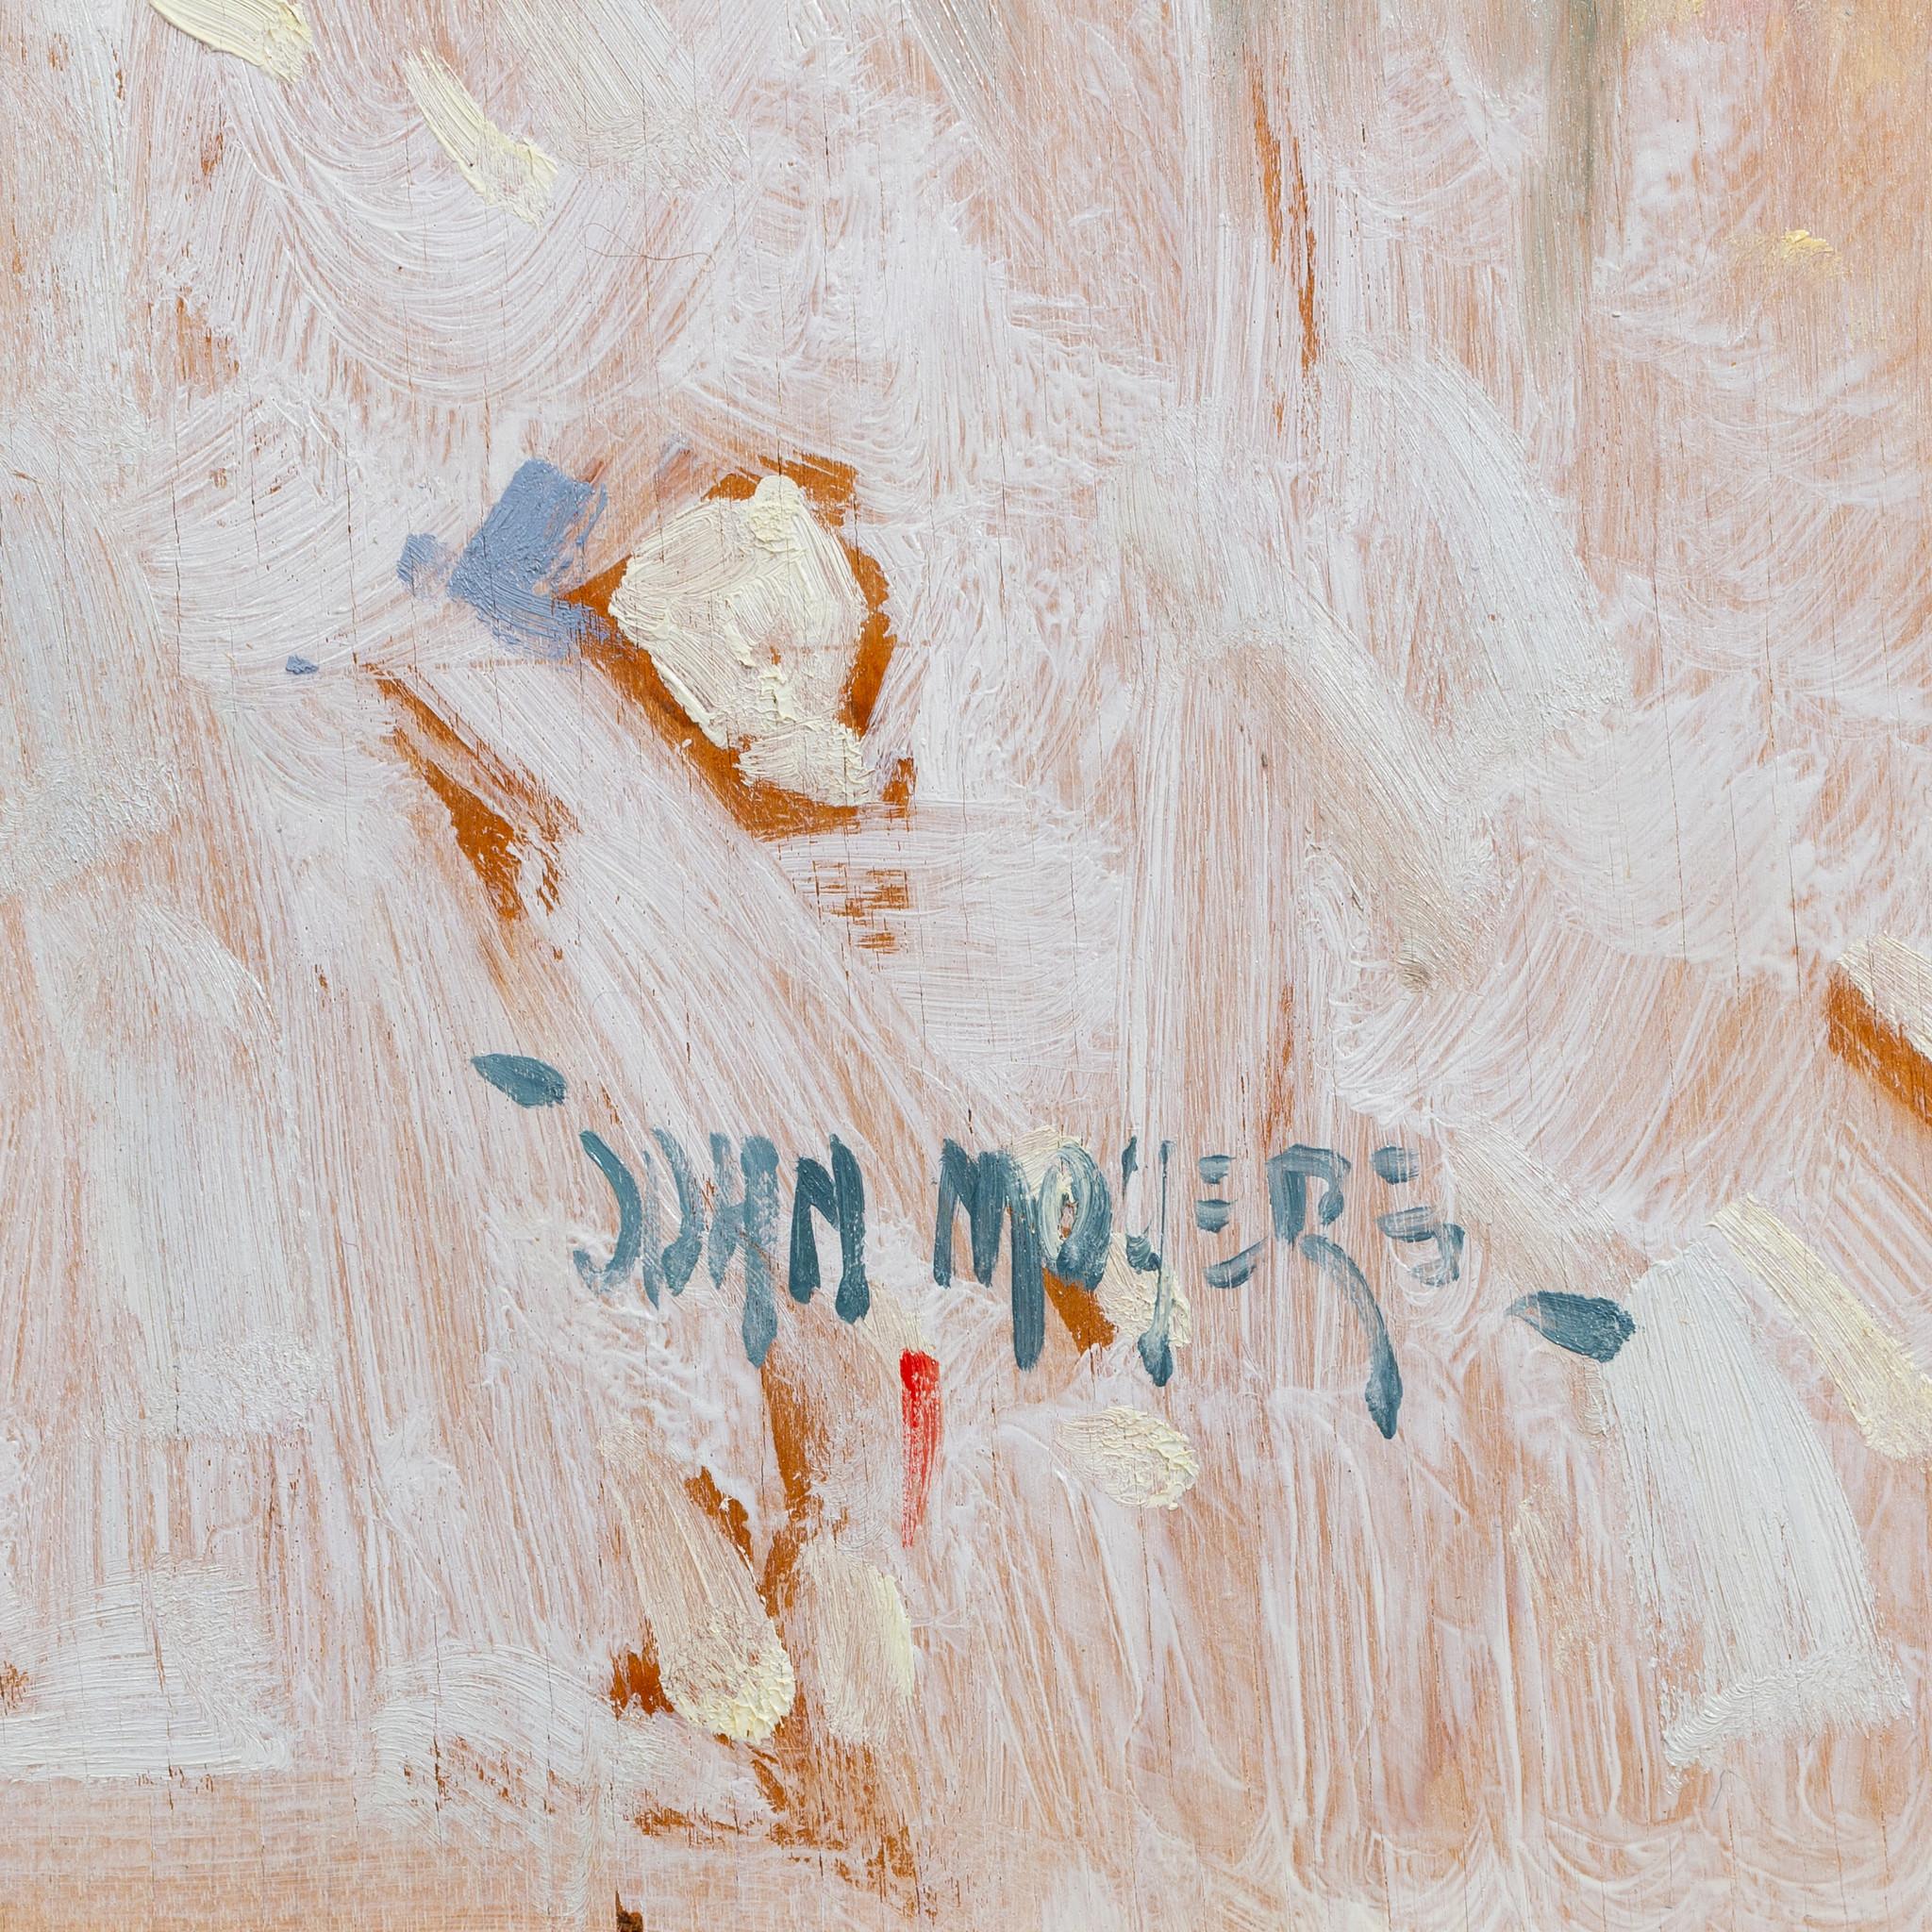 John Moyers original oil on panel; untitled, 16